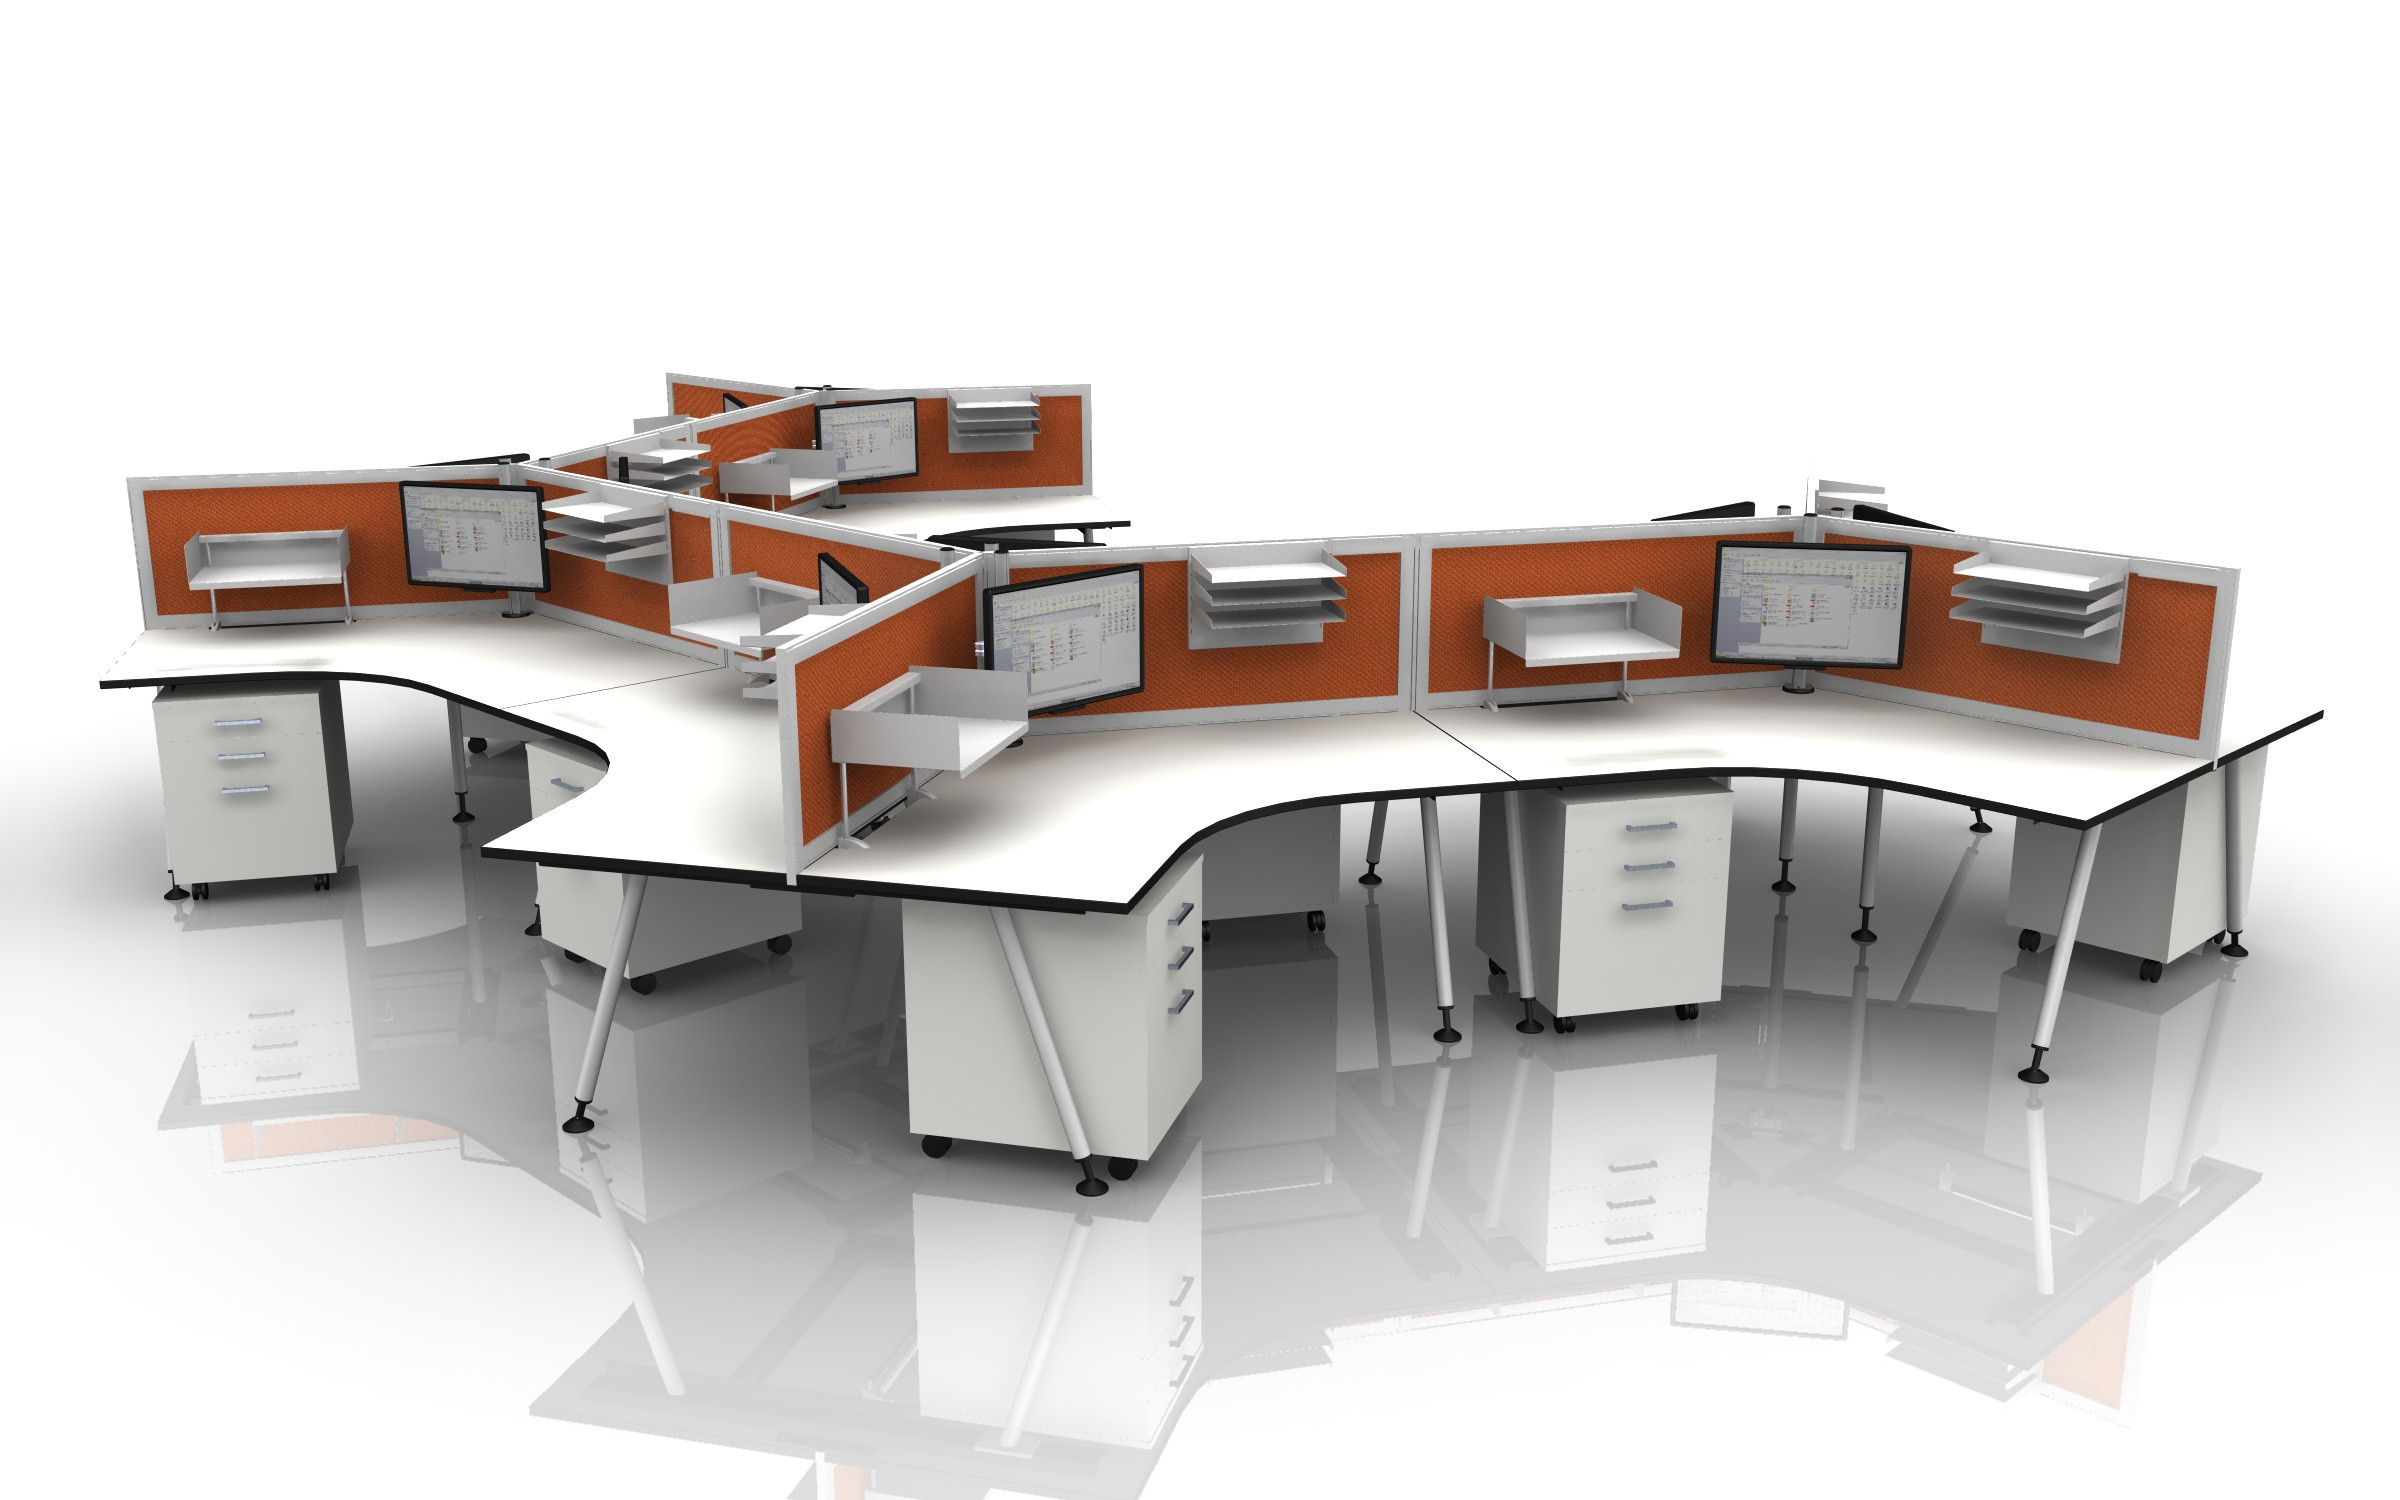 Best ideas about Modular Office Furniture
. Save or Pin Modular fice Furniture richfielduniversity Now.